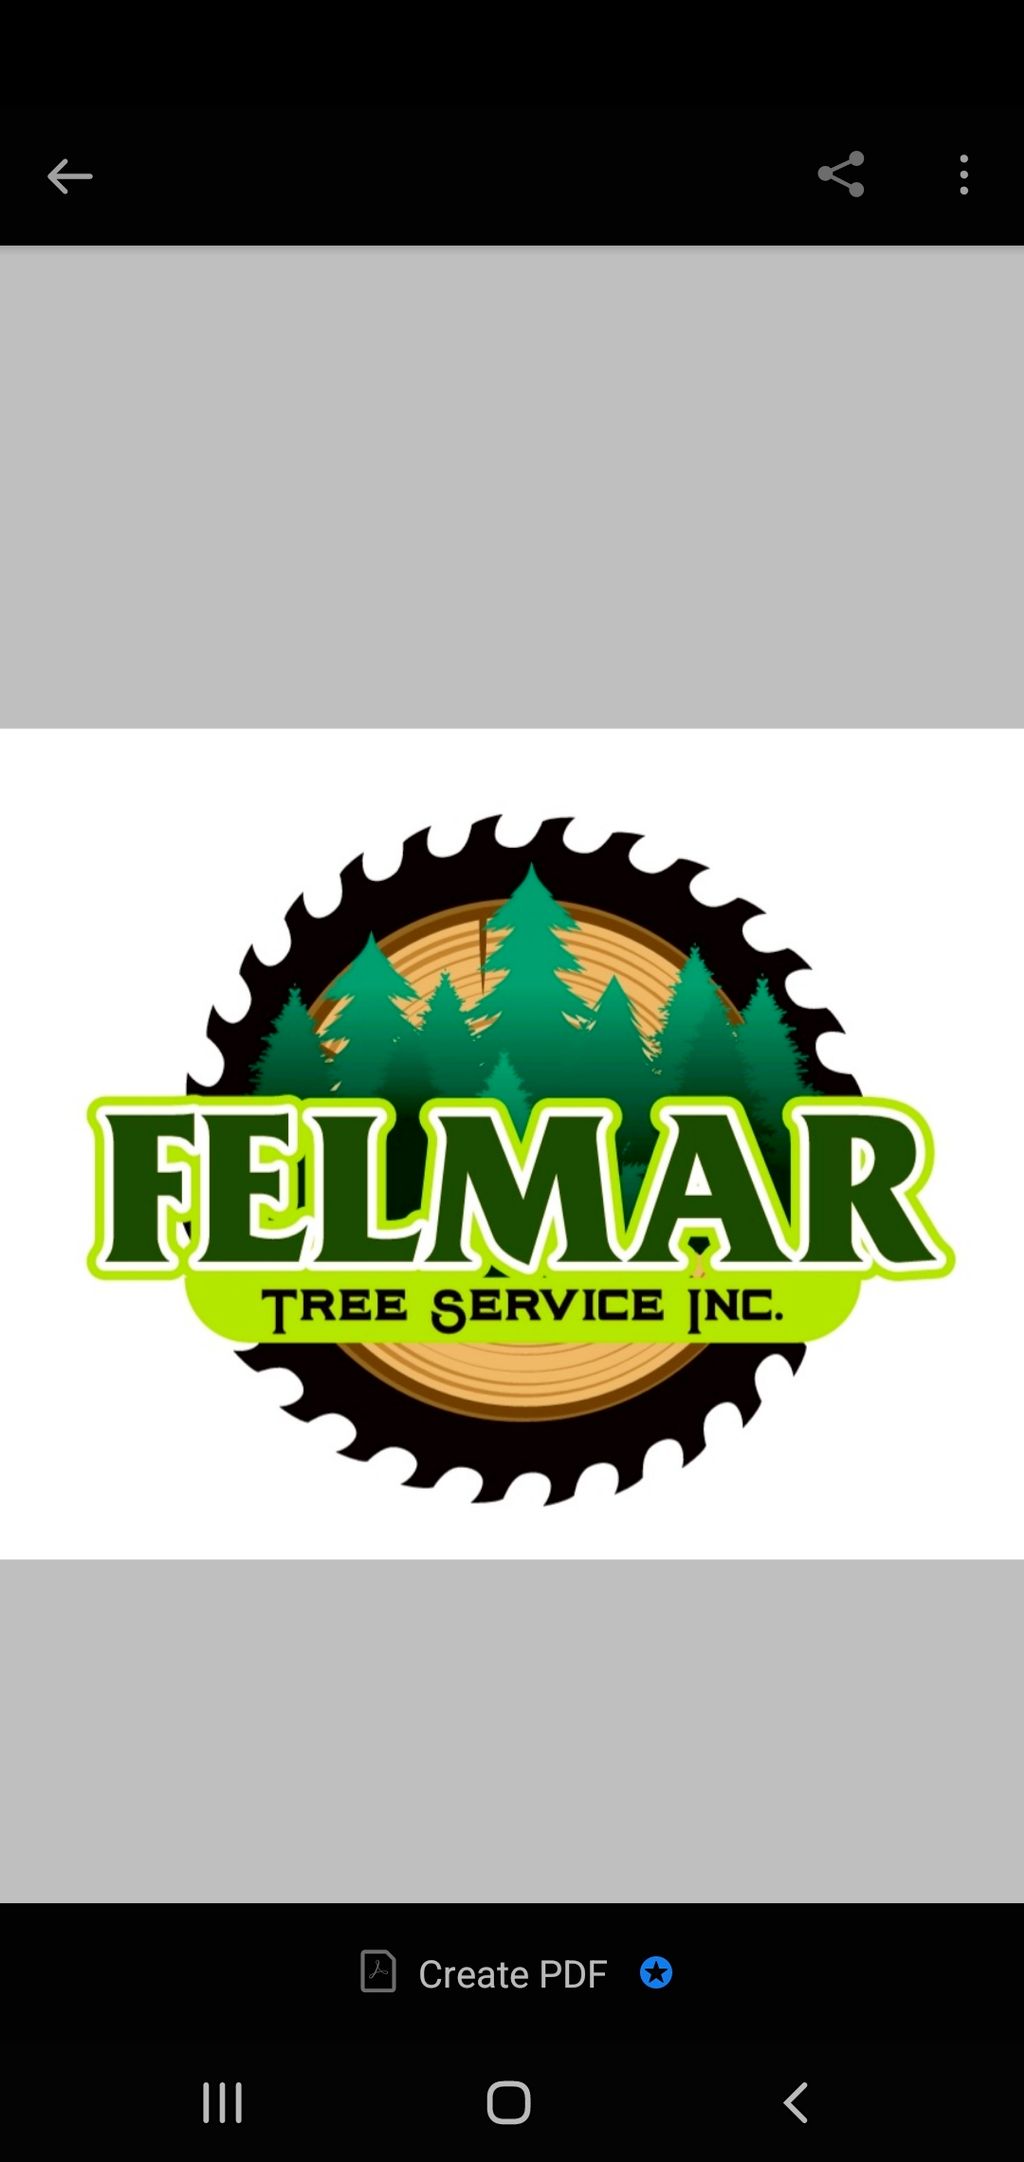 Felmar Tree Service Inc